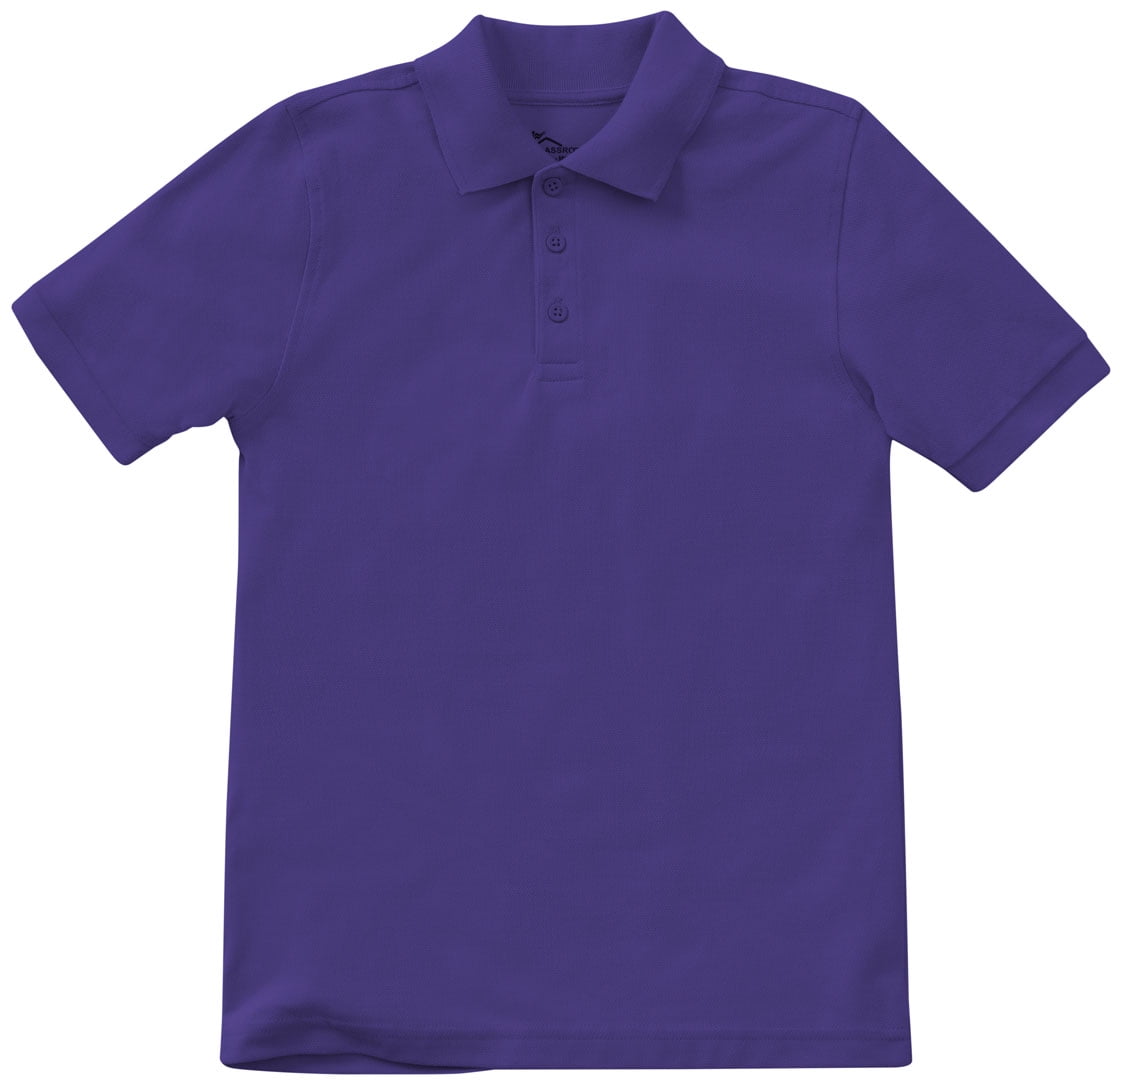 Boys Kids Short Sleeve School Wear Shirt Collared Casual Uniform Twin Pack Shirt 